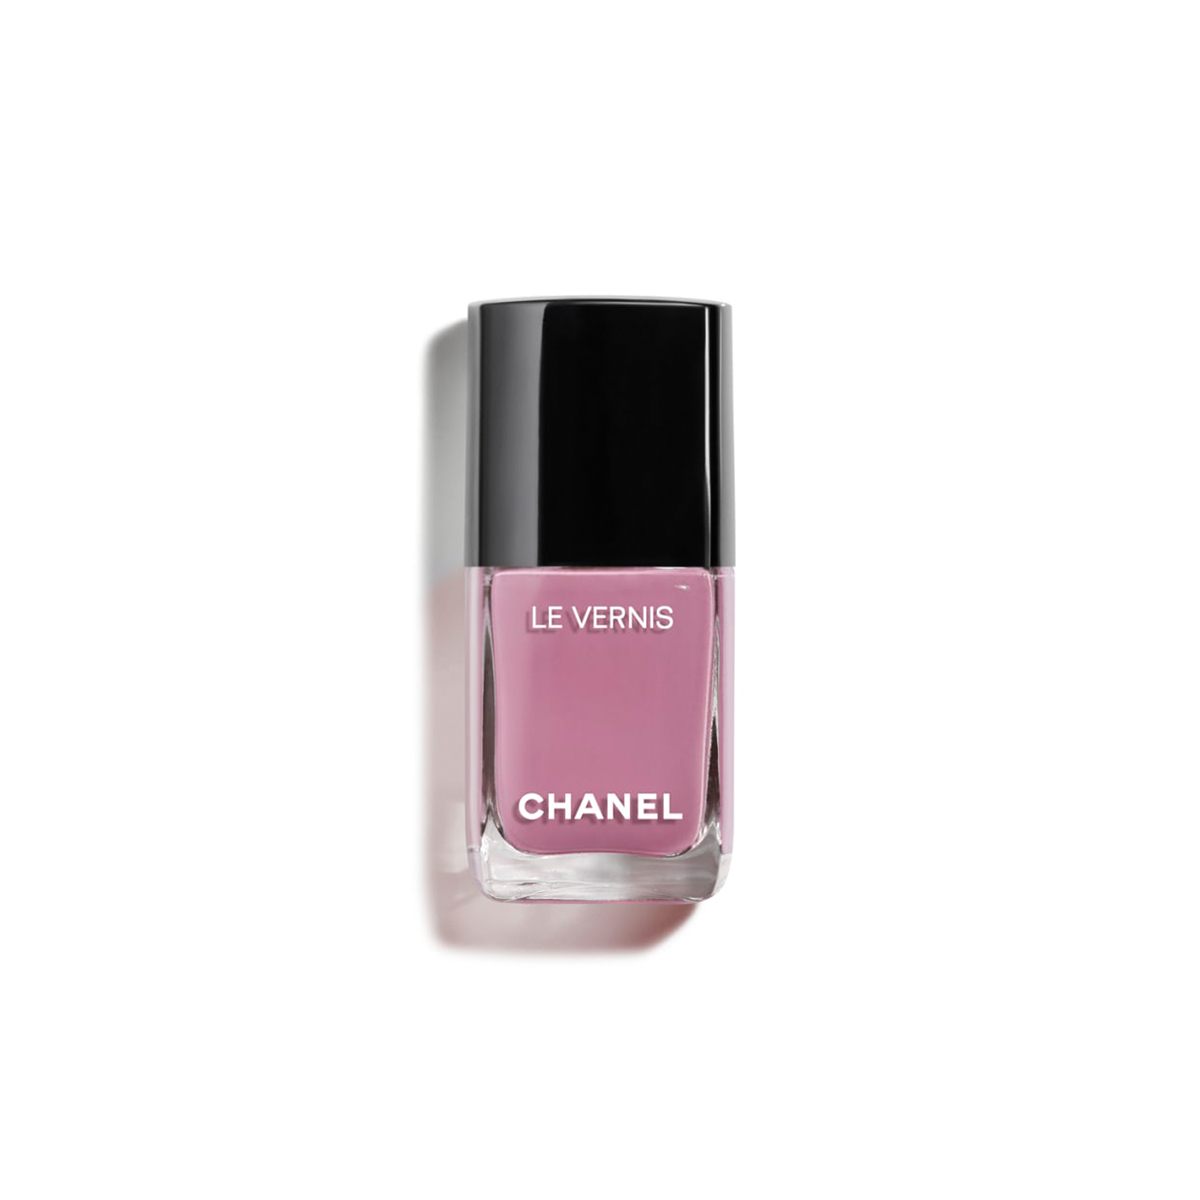 Chanel Le Vernis Longwear nagelfärg i Mirage